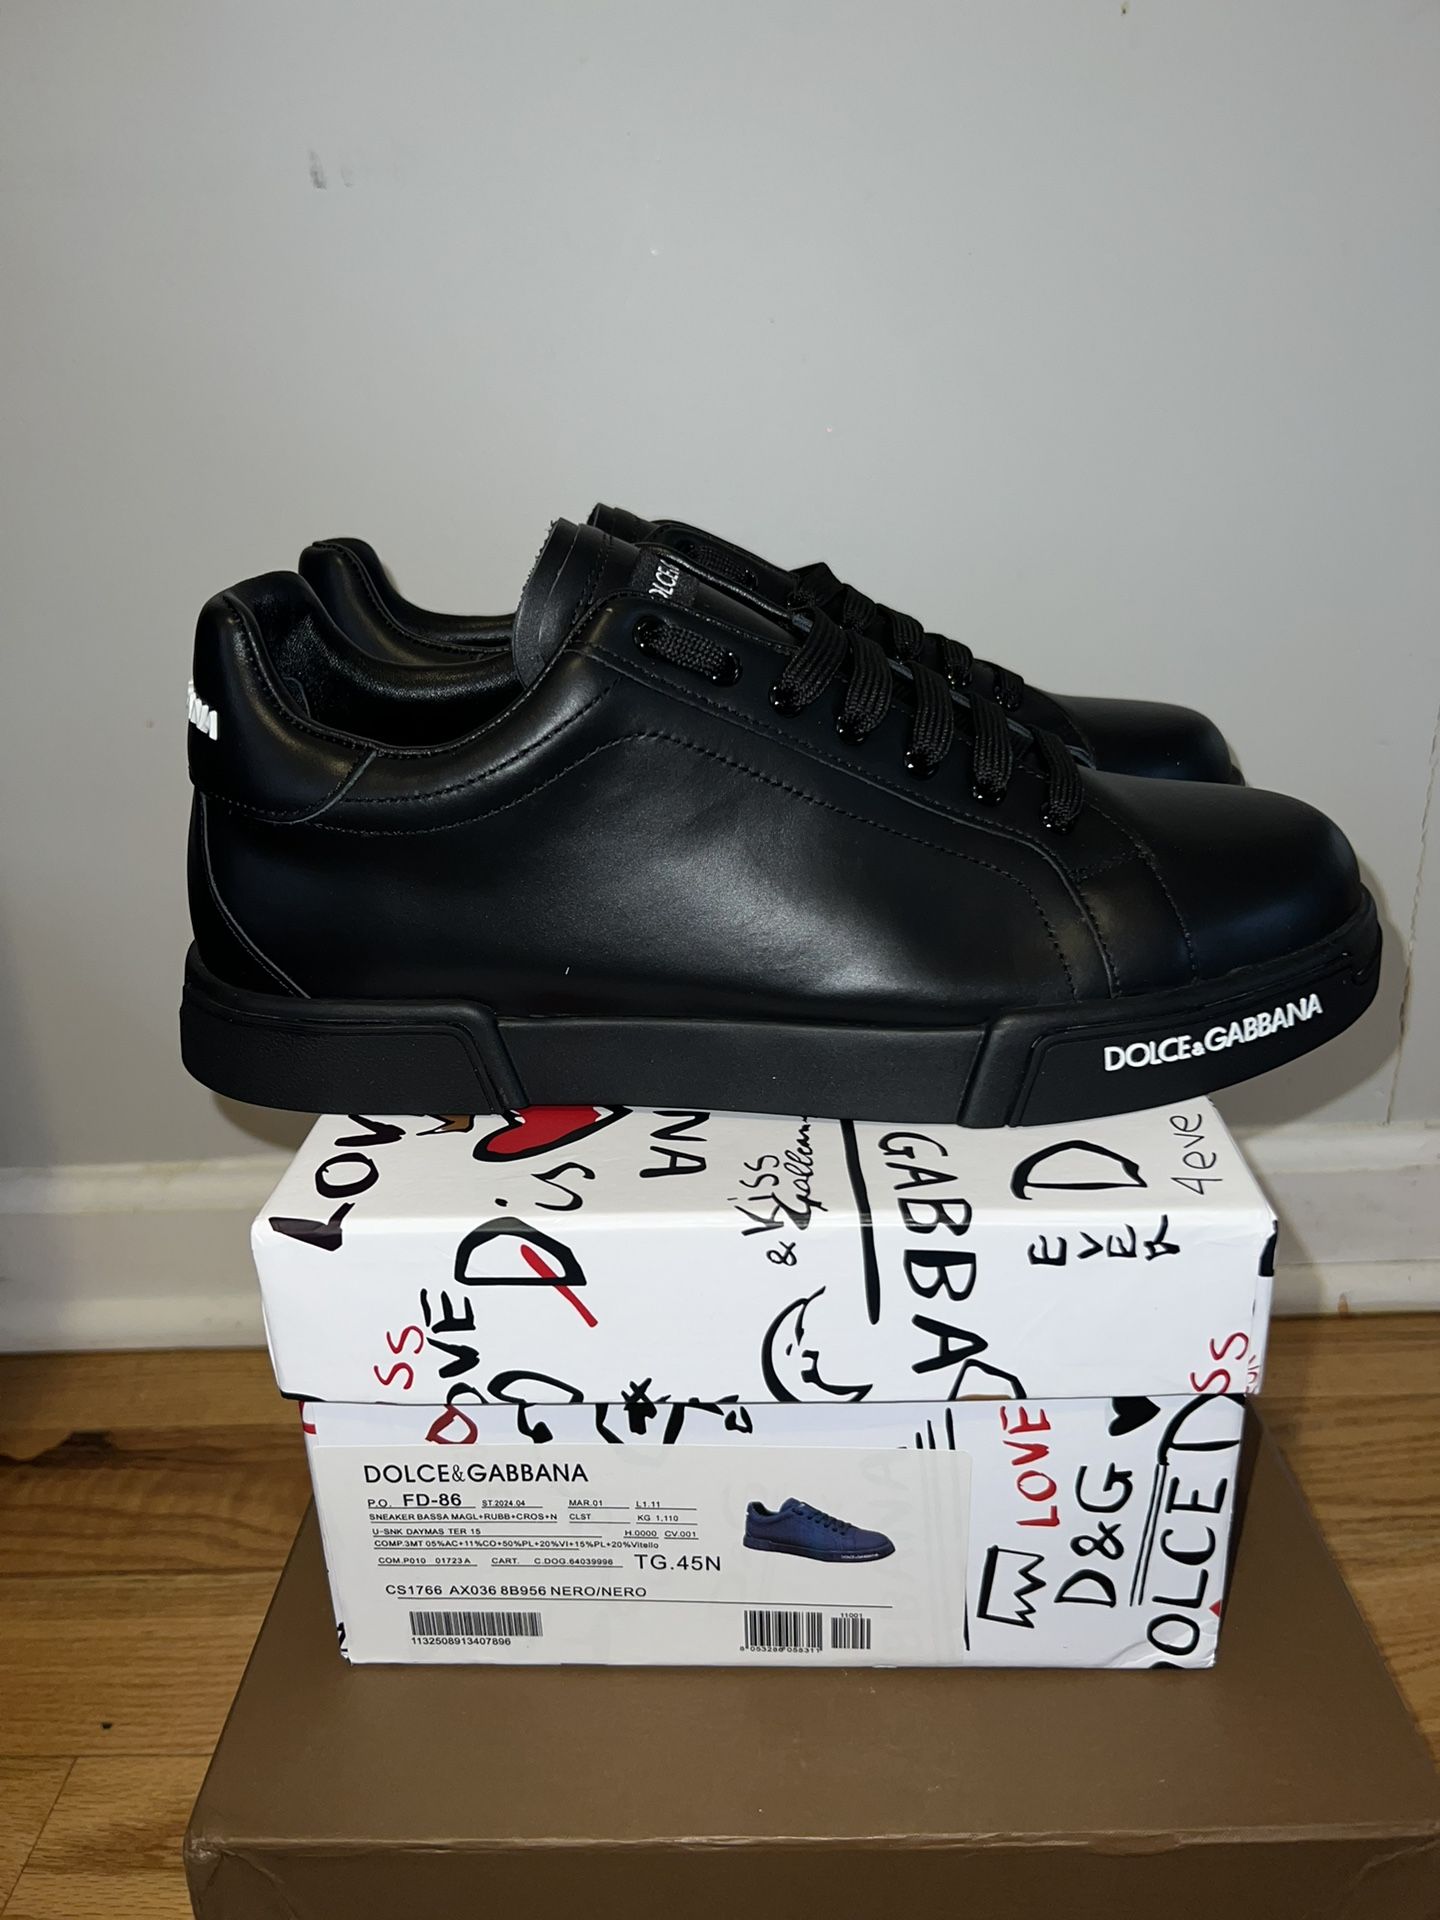 Dolce Gabbana Sneakers Size 10 Brand New Jordan